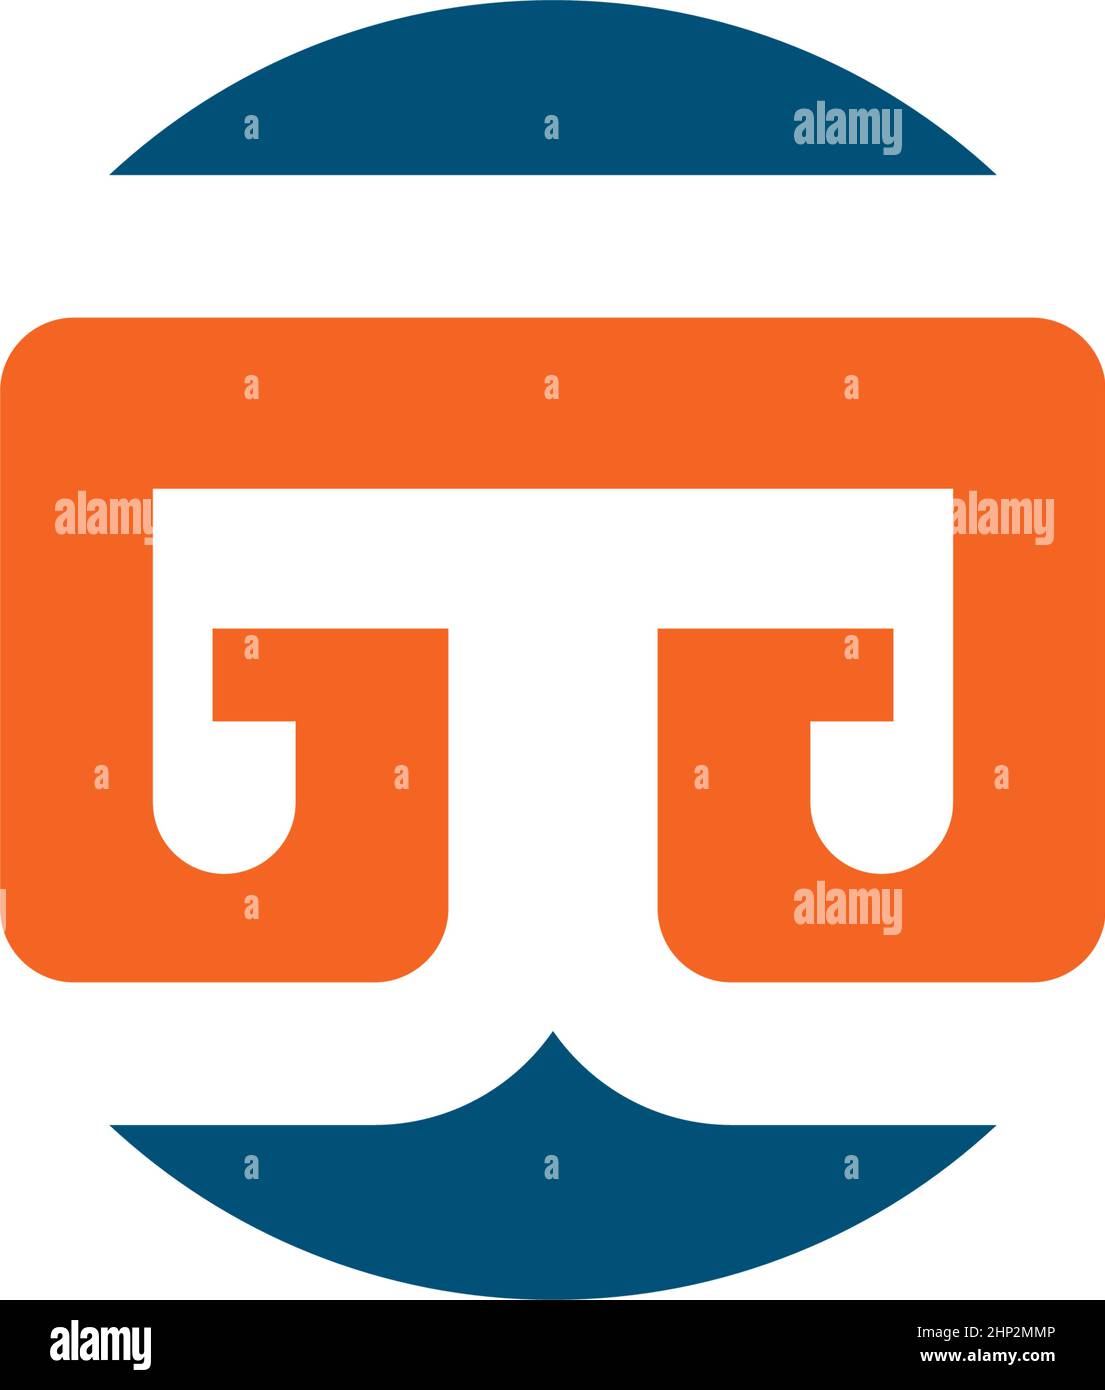 GG or gd letter vector icon logo design illustration Stock Vector